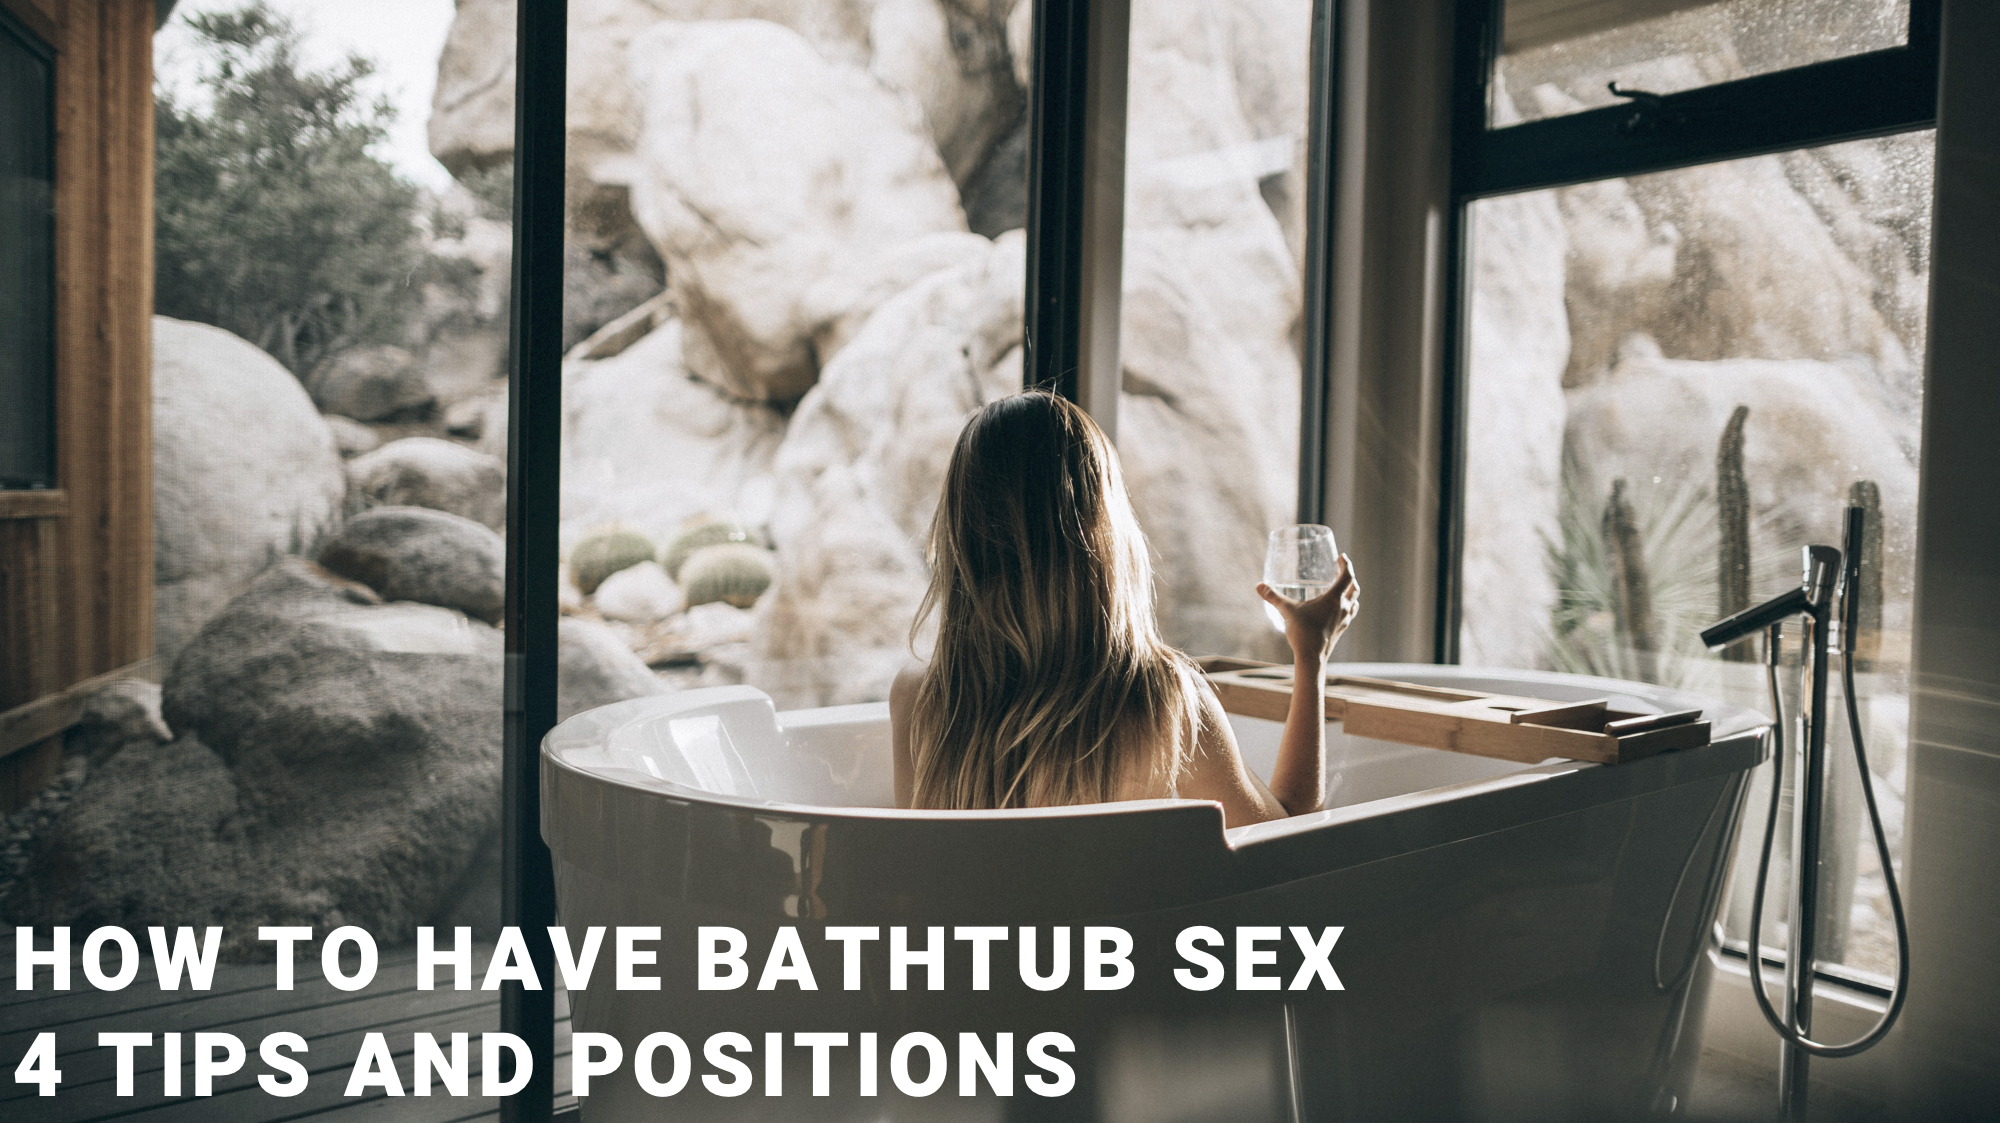 Bathtub Sex 4